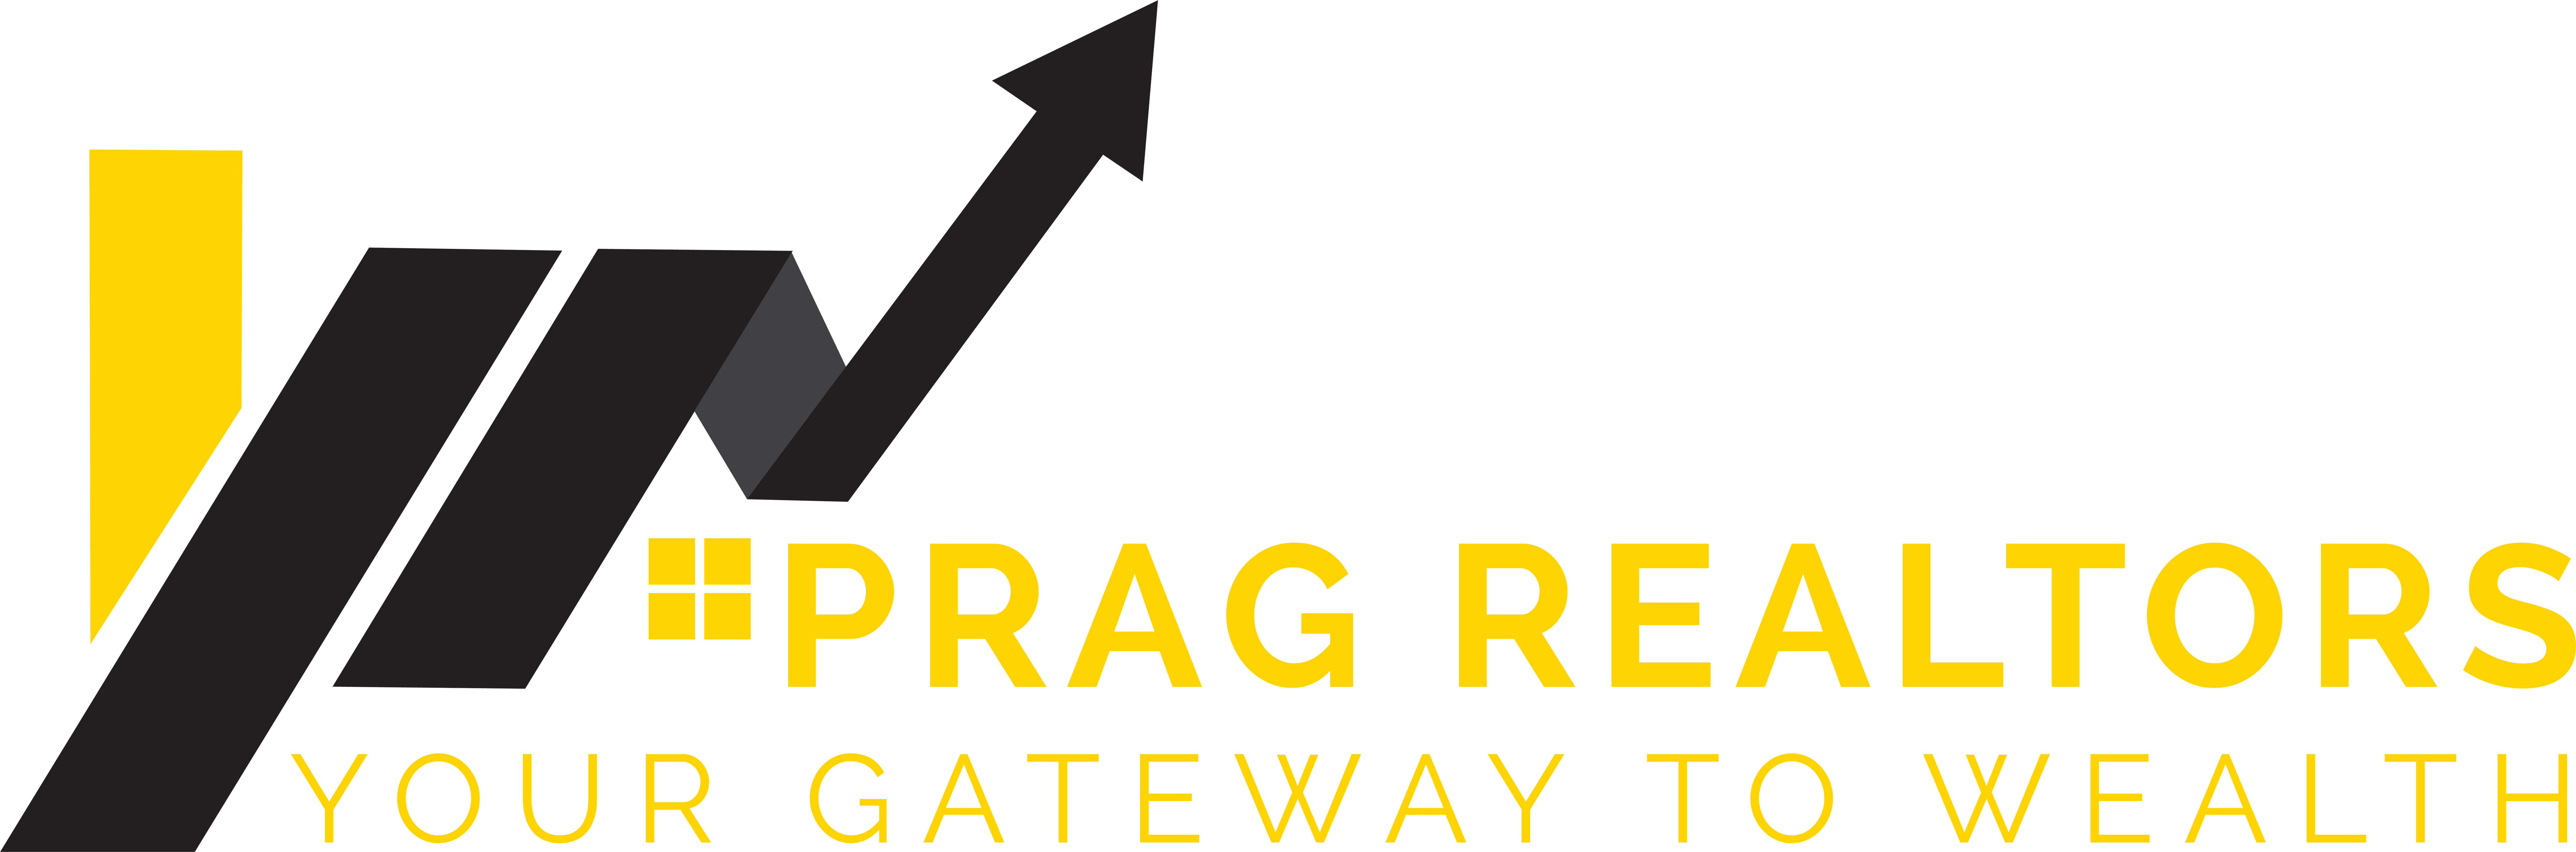 Prag Realtors - Real Estate (11488x3836), Png Download